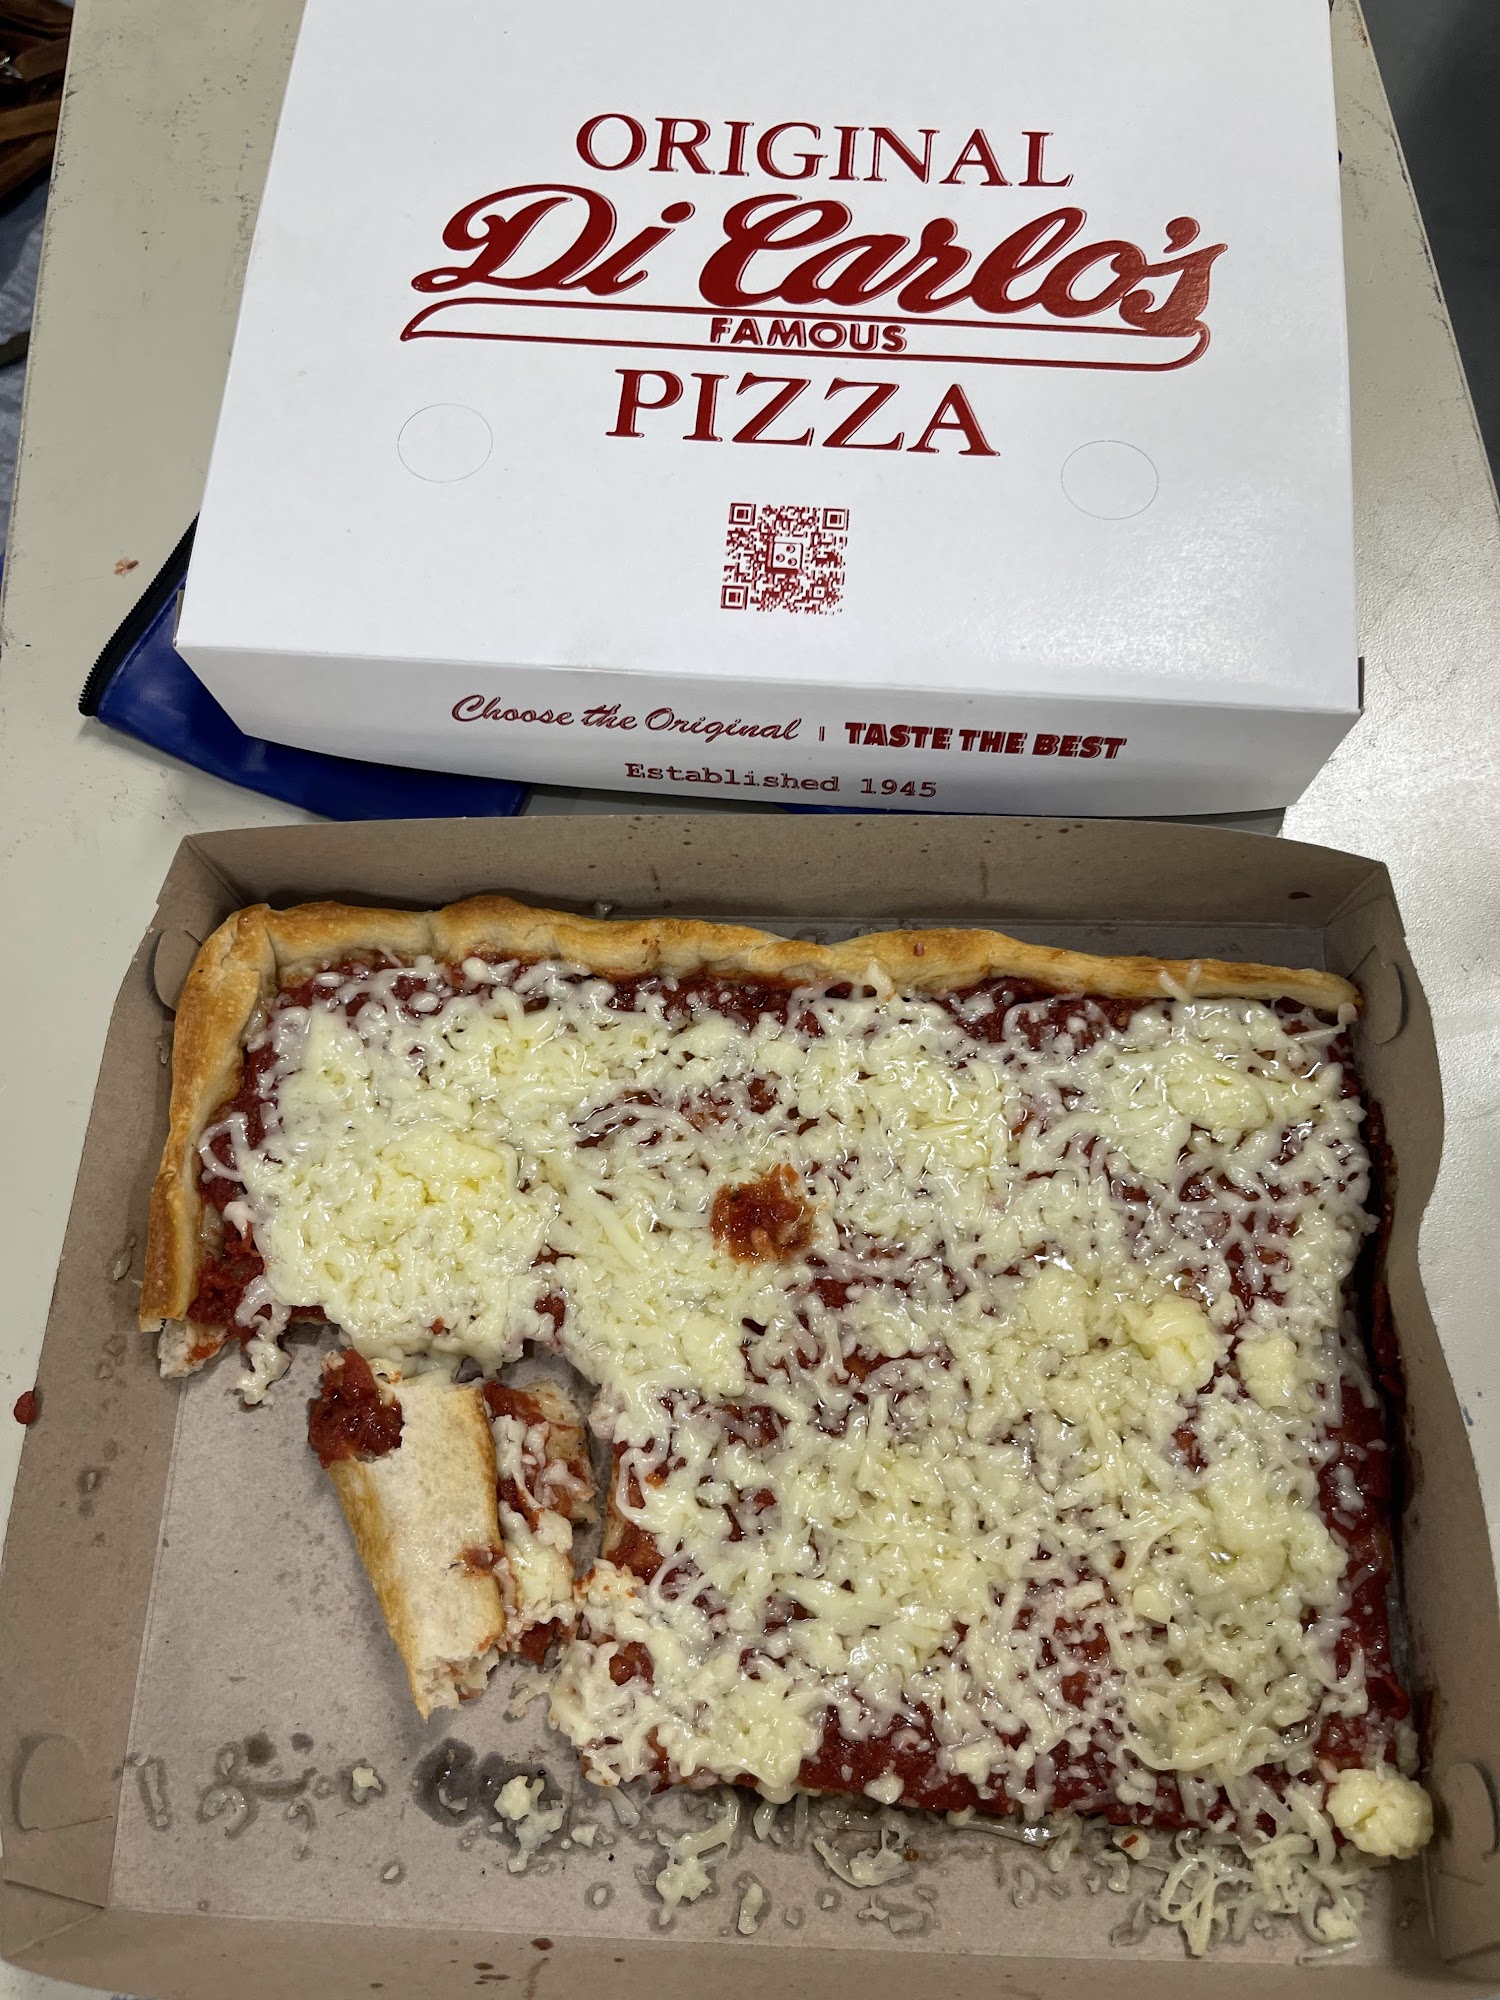 DiCarlo’s Pizza - Columbus